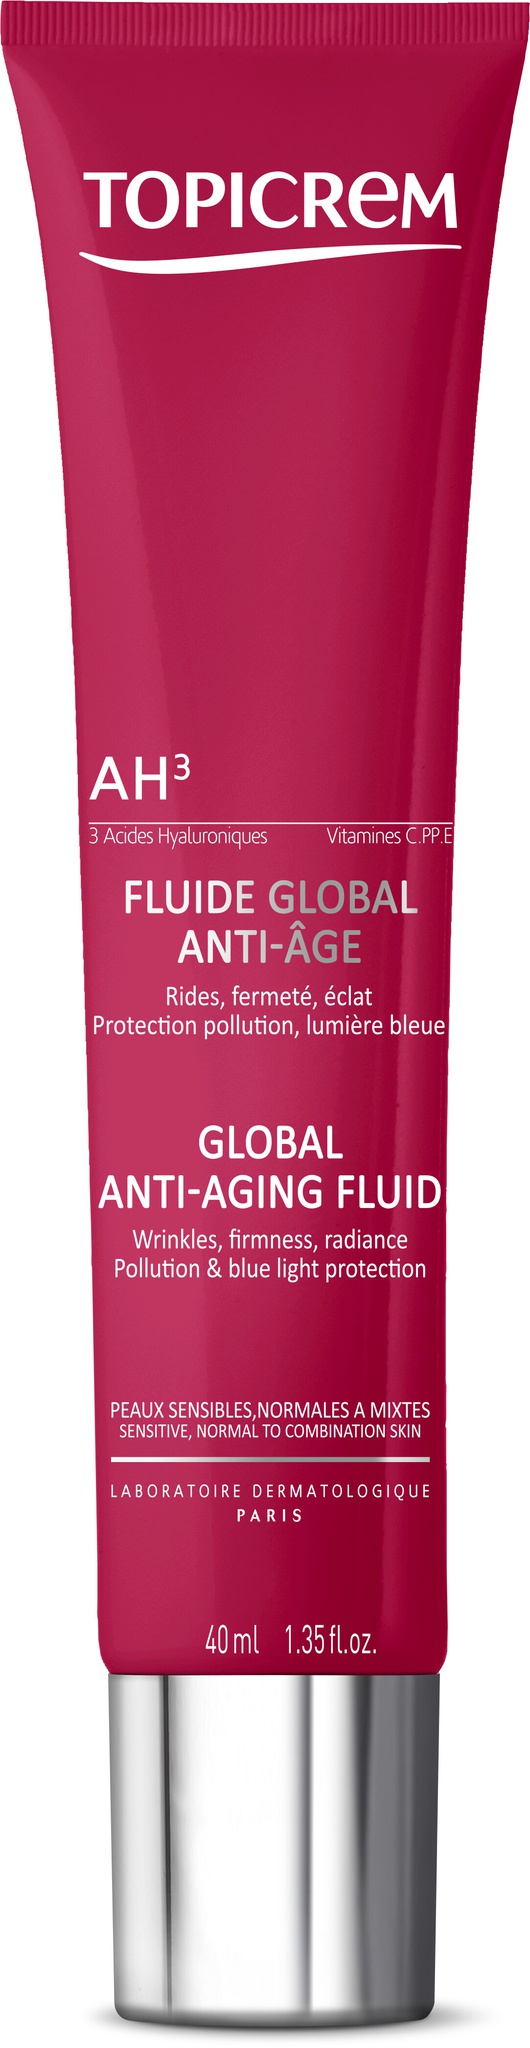 Topicrem AH3 Global Anti-Aging Fluid